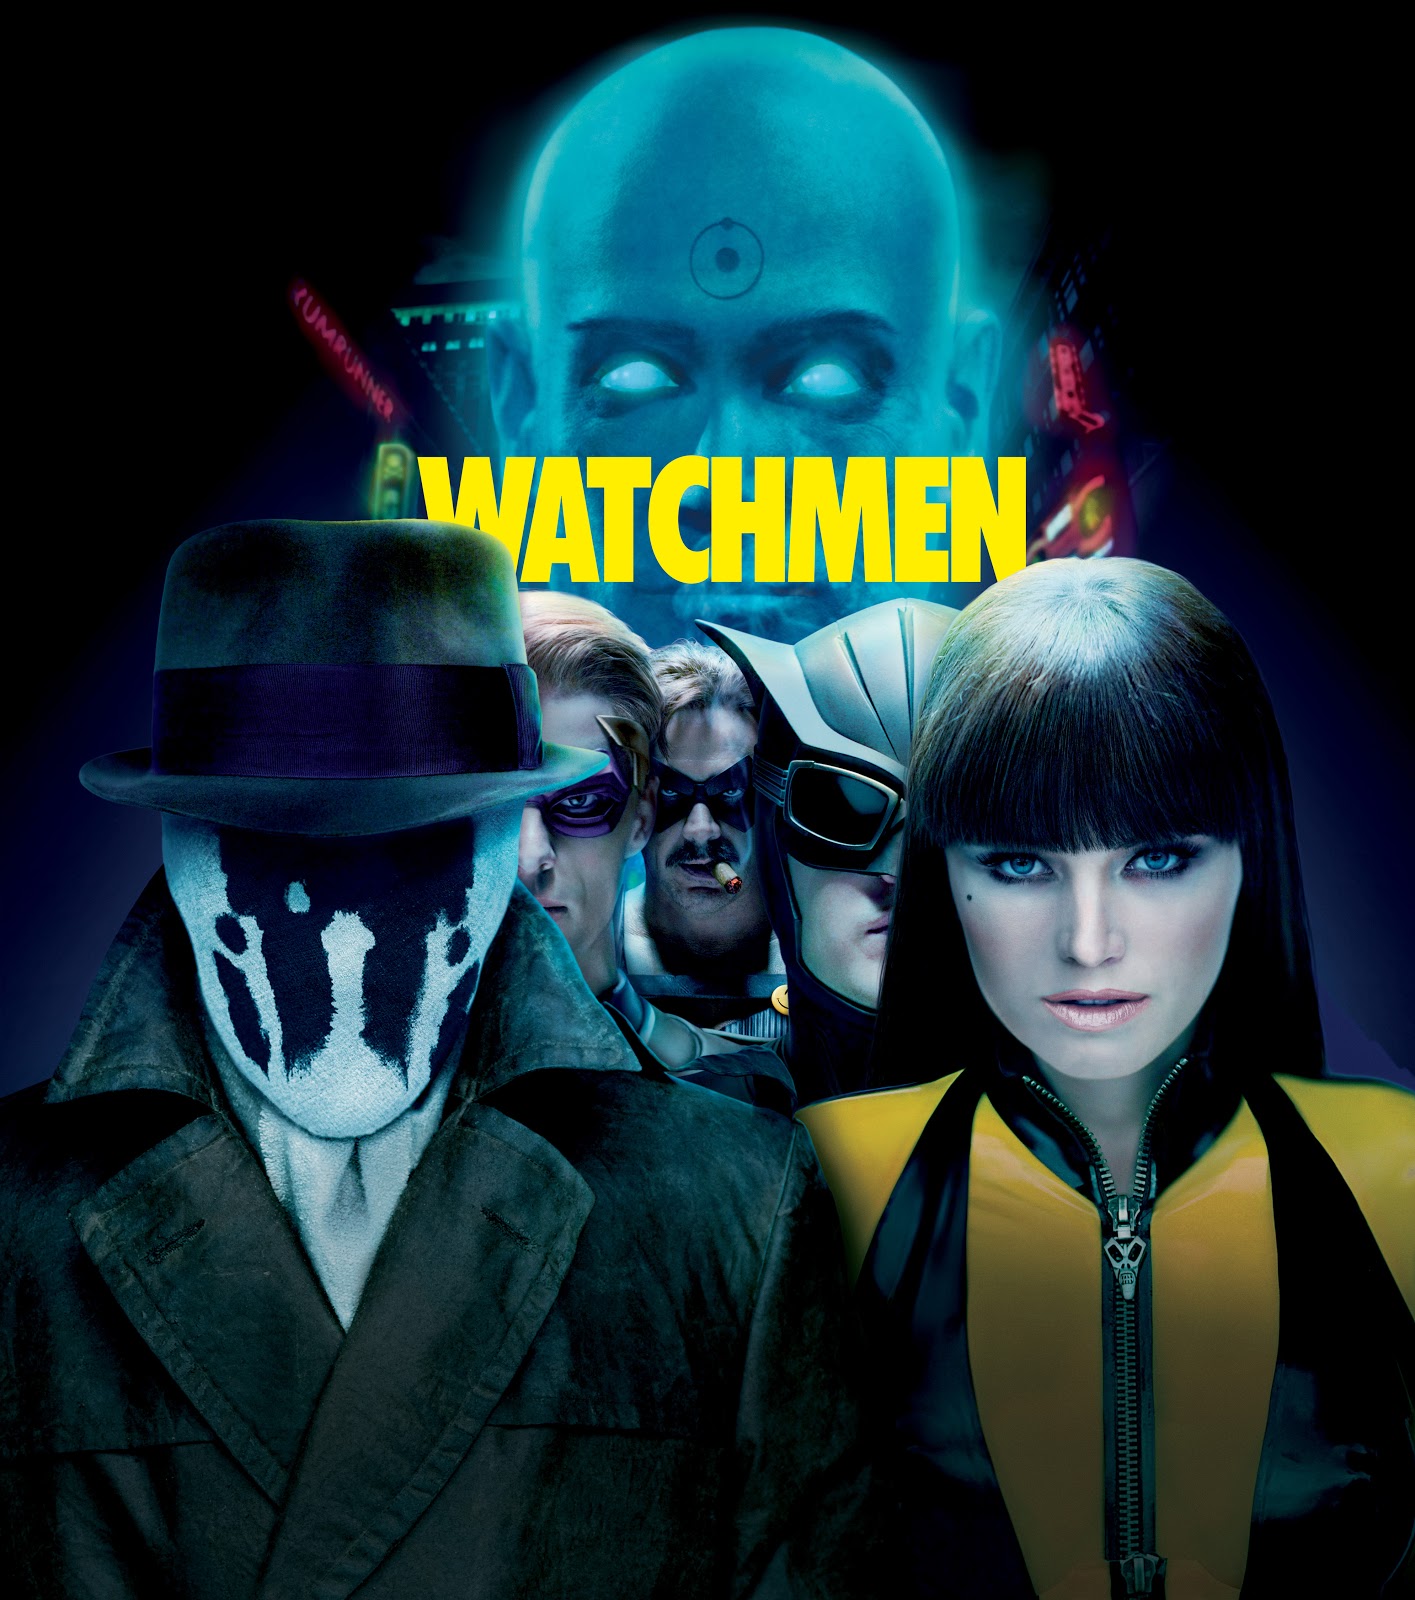 http://2.bp.blogspot.com/-l9lKebOv13s/Tw2gPZ34uhI/AAAAAAAABho/V4PIZ1gfXws/s1600/Watchmen-Poster-23.jpg